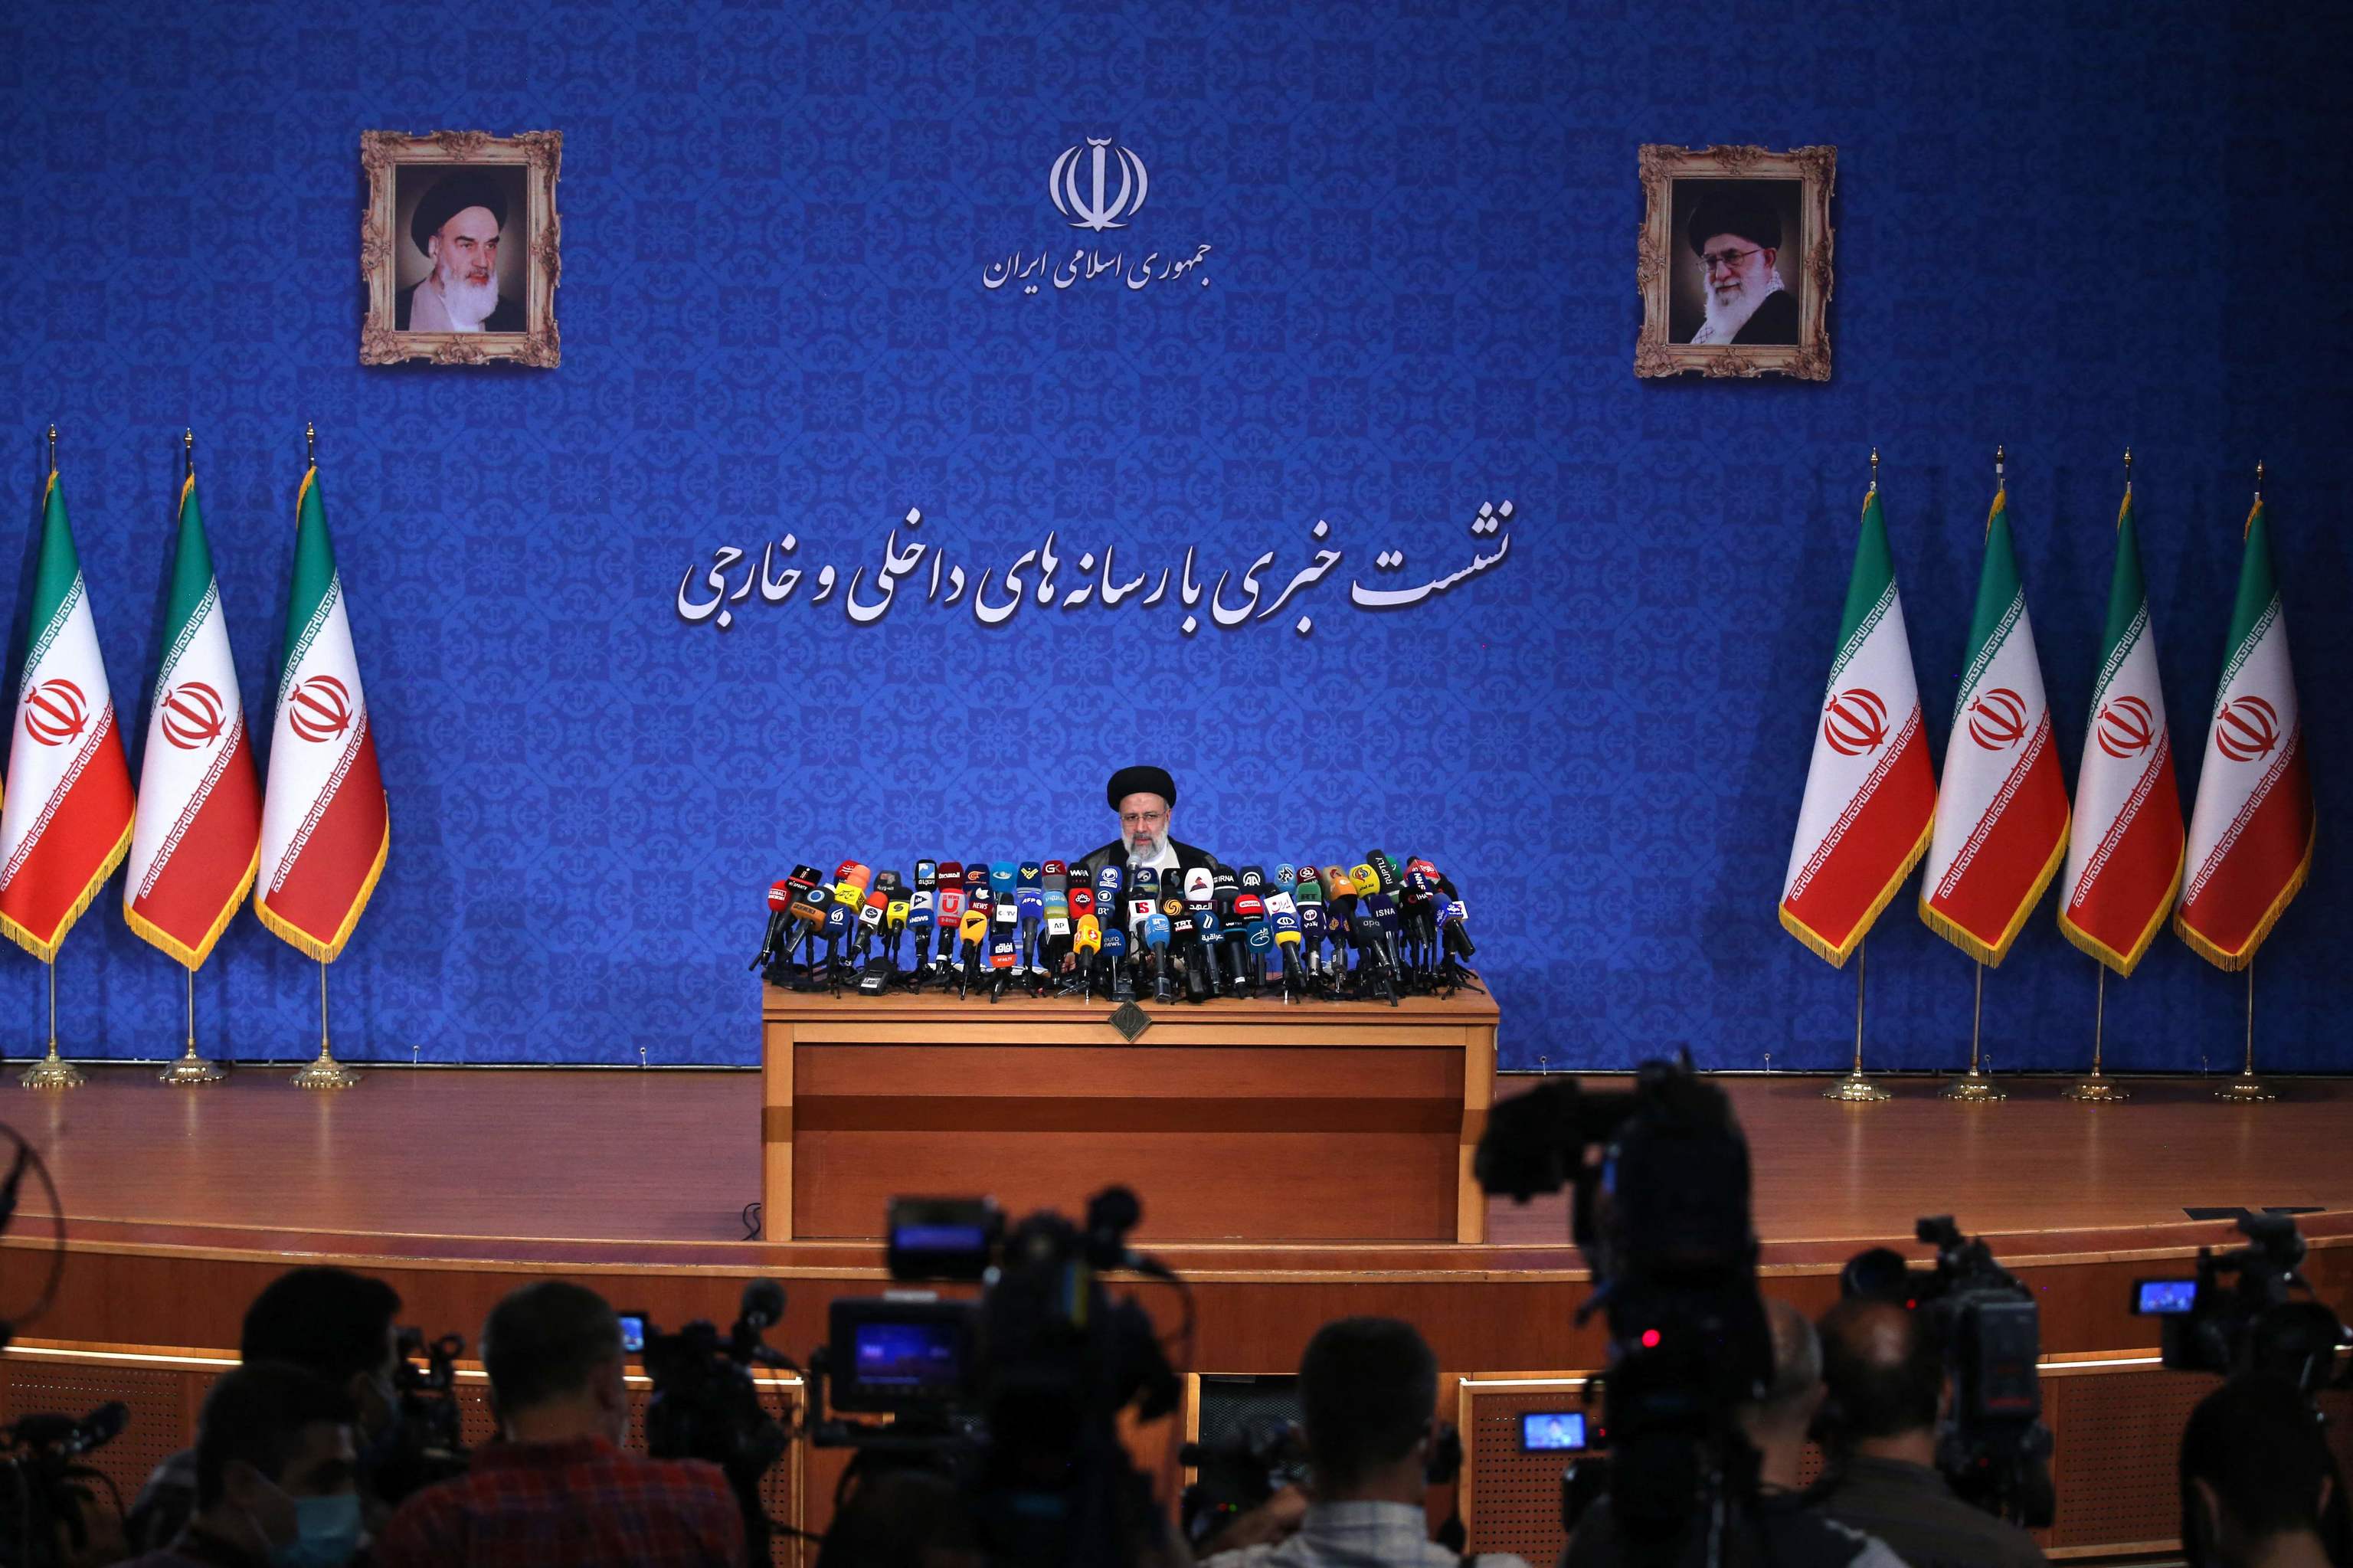 Primera rueda de prensa del nuevo presidente iran, Ibrahim Raisi, este lunes.